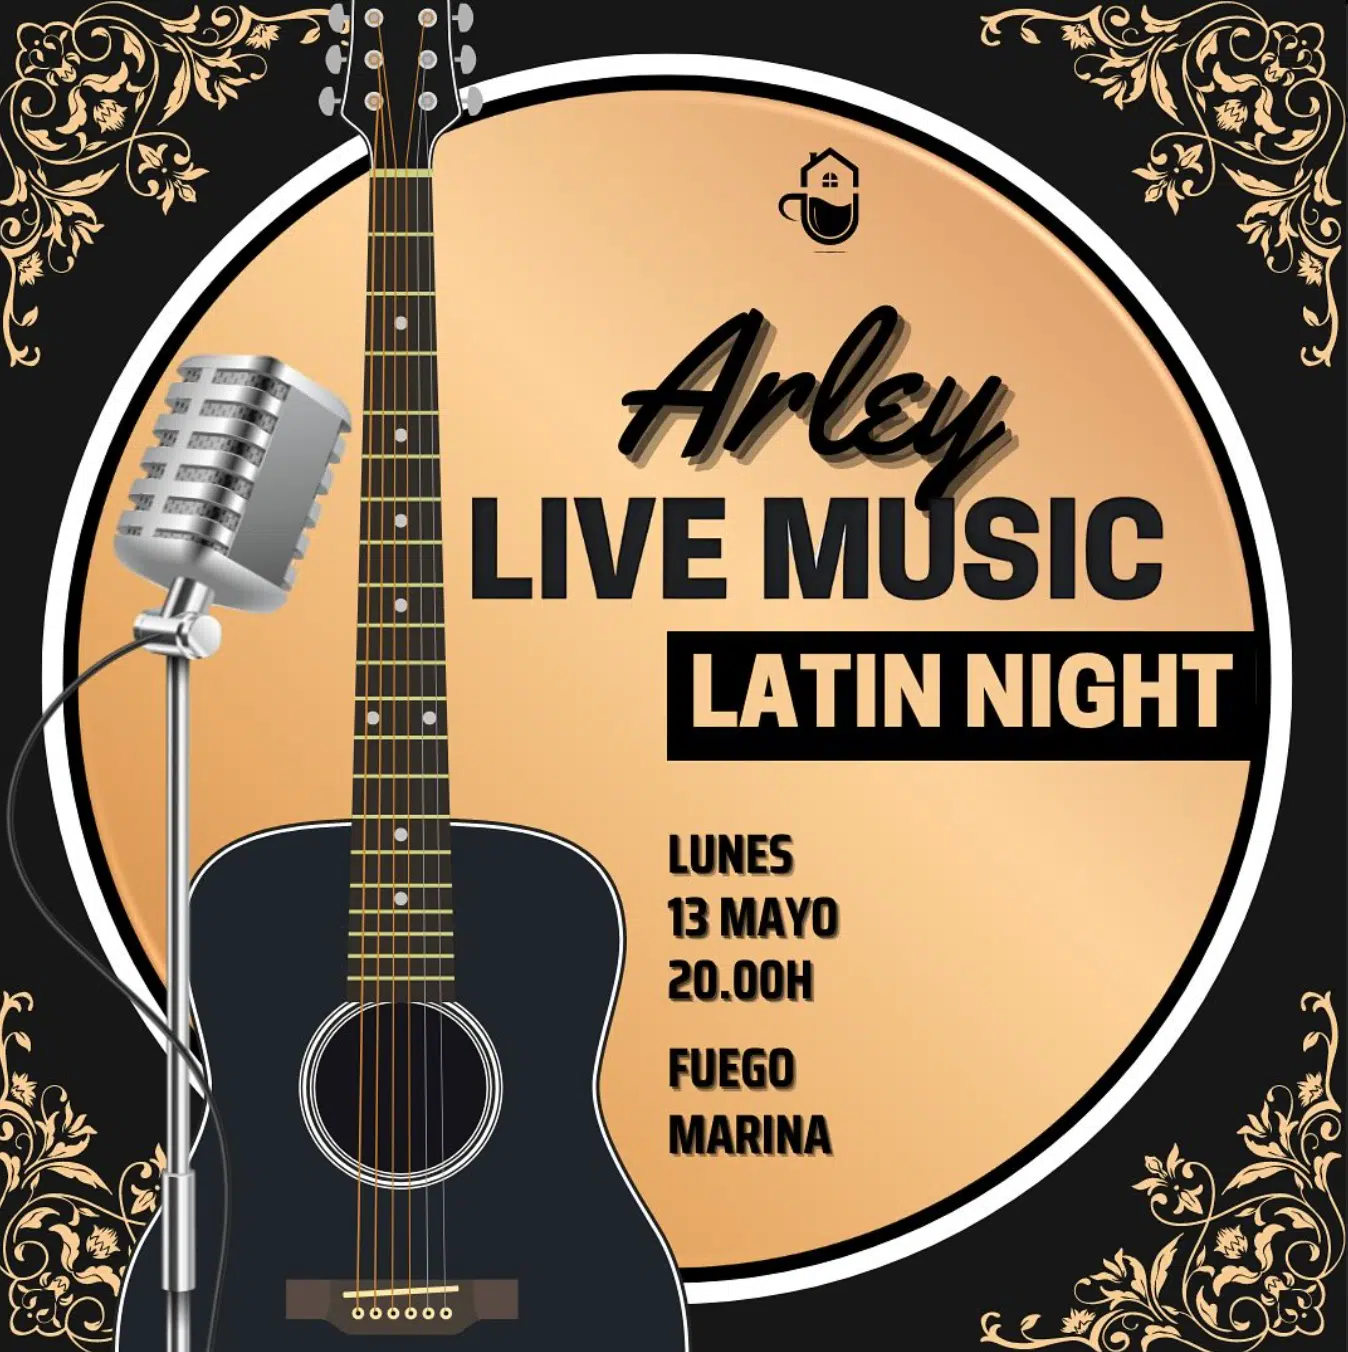 Arley live music latin night